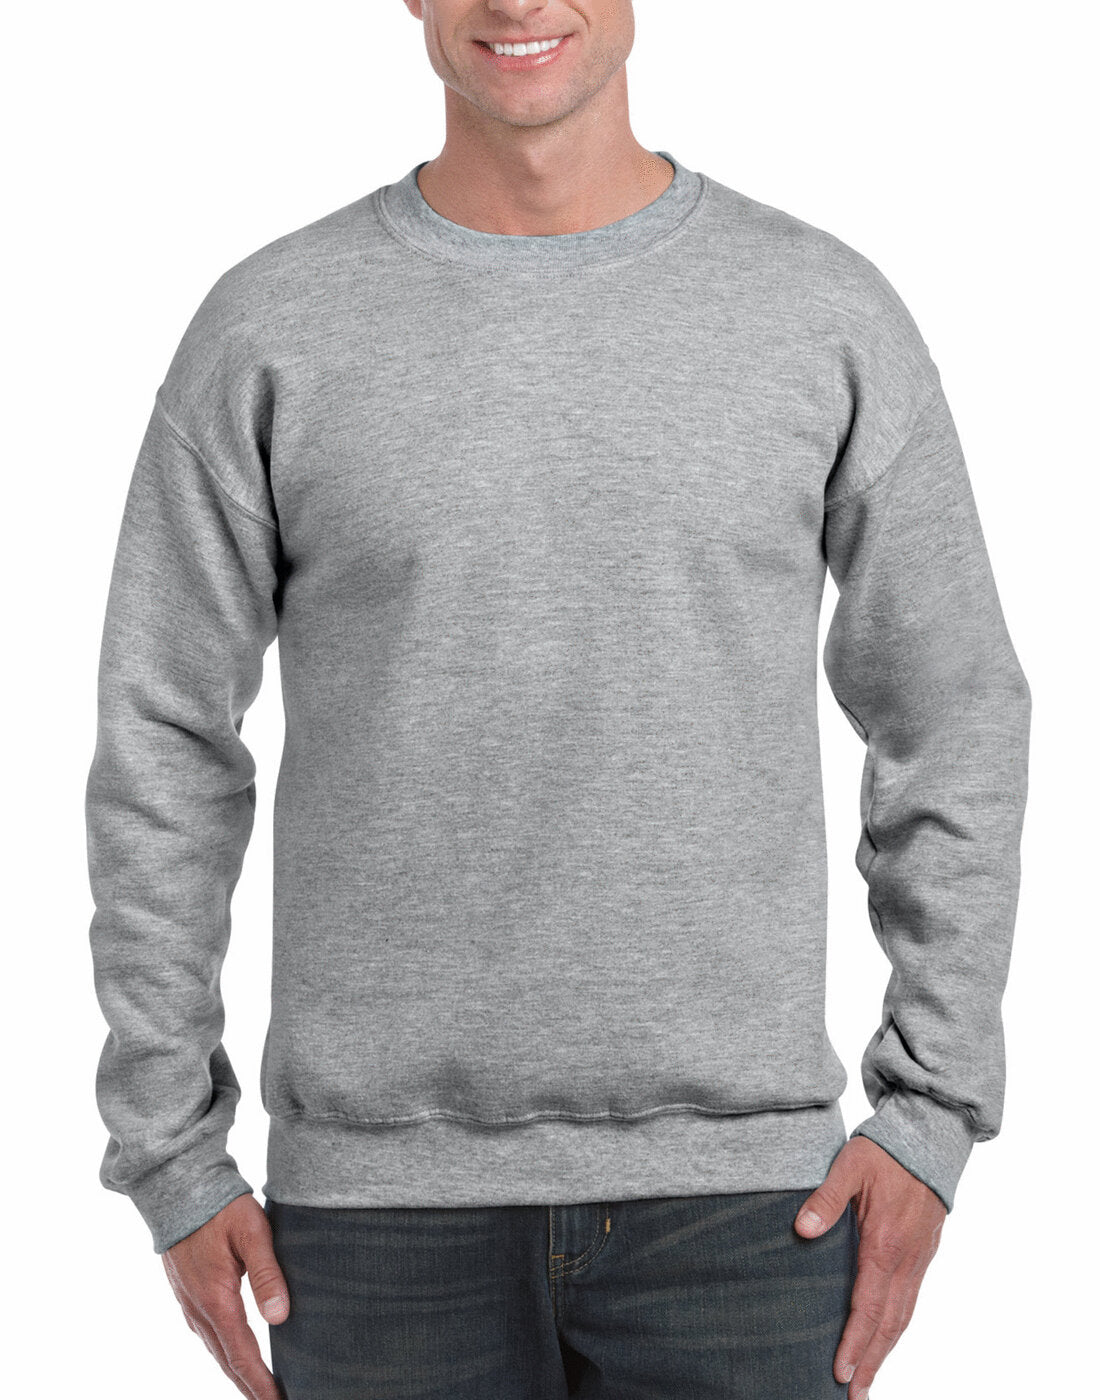 Gildan Dryblend Adult Crew Neck Sweatshirt - Sports Grey